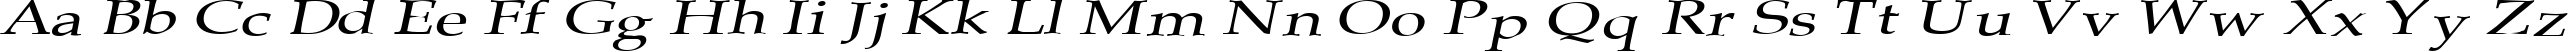 Пример написания английского алфавита шрифтом Plain Squashed